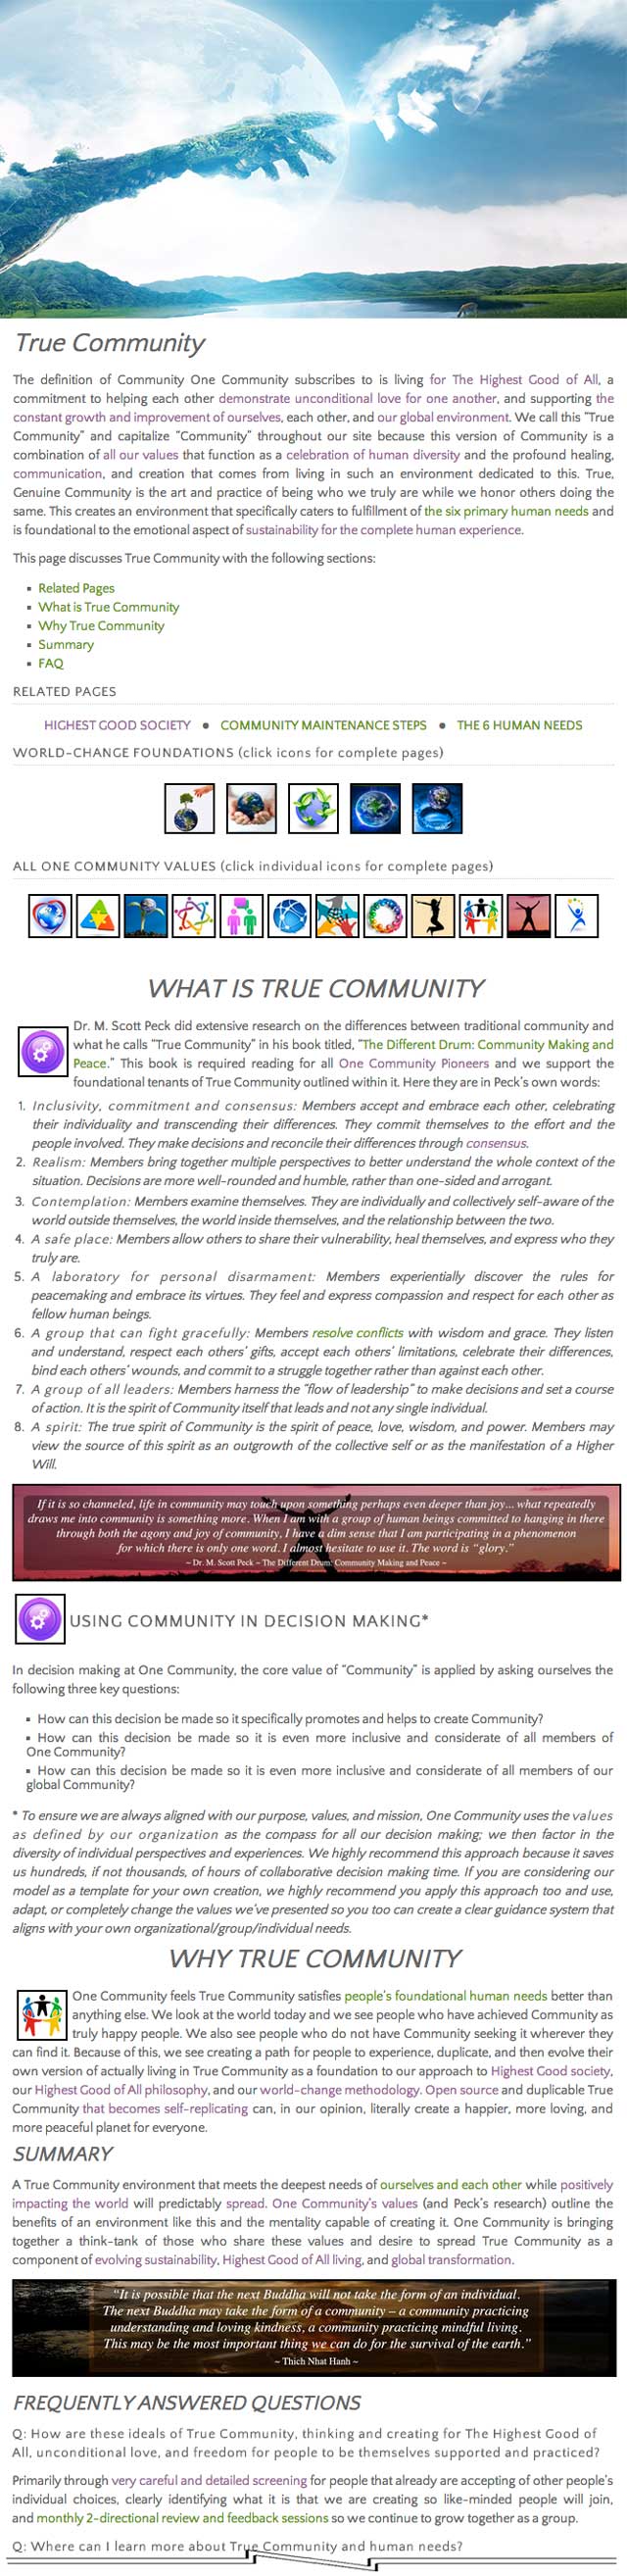 True Community page, One Community